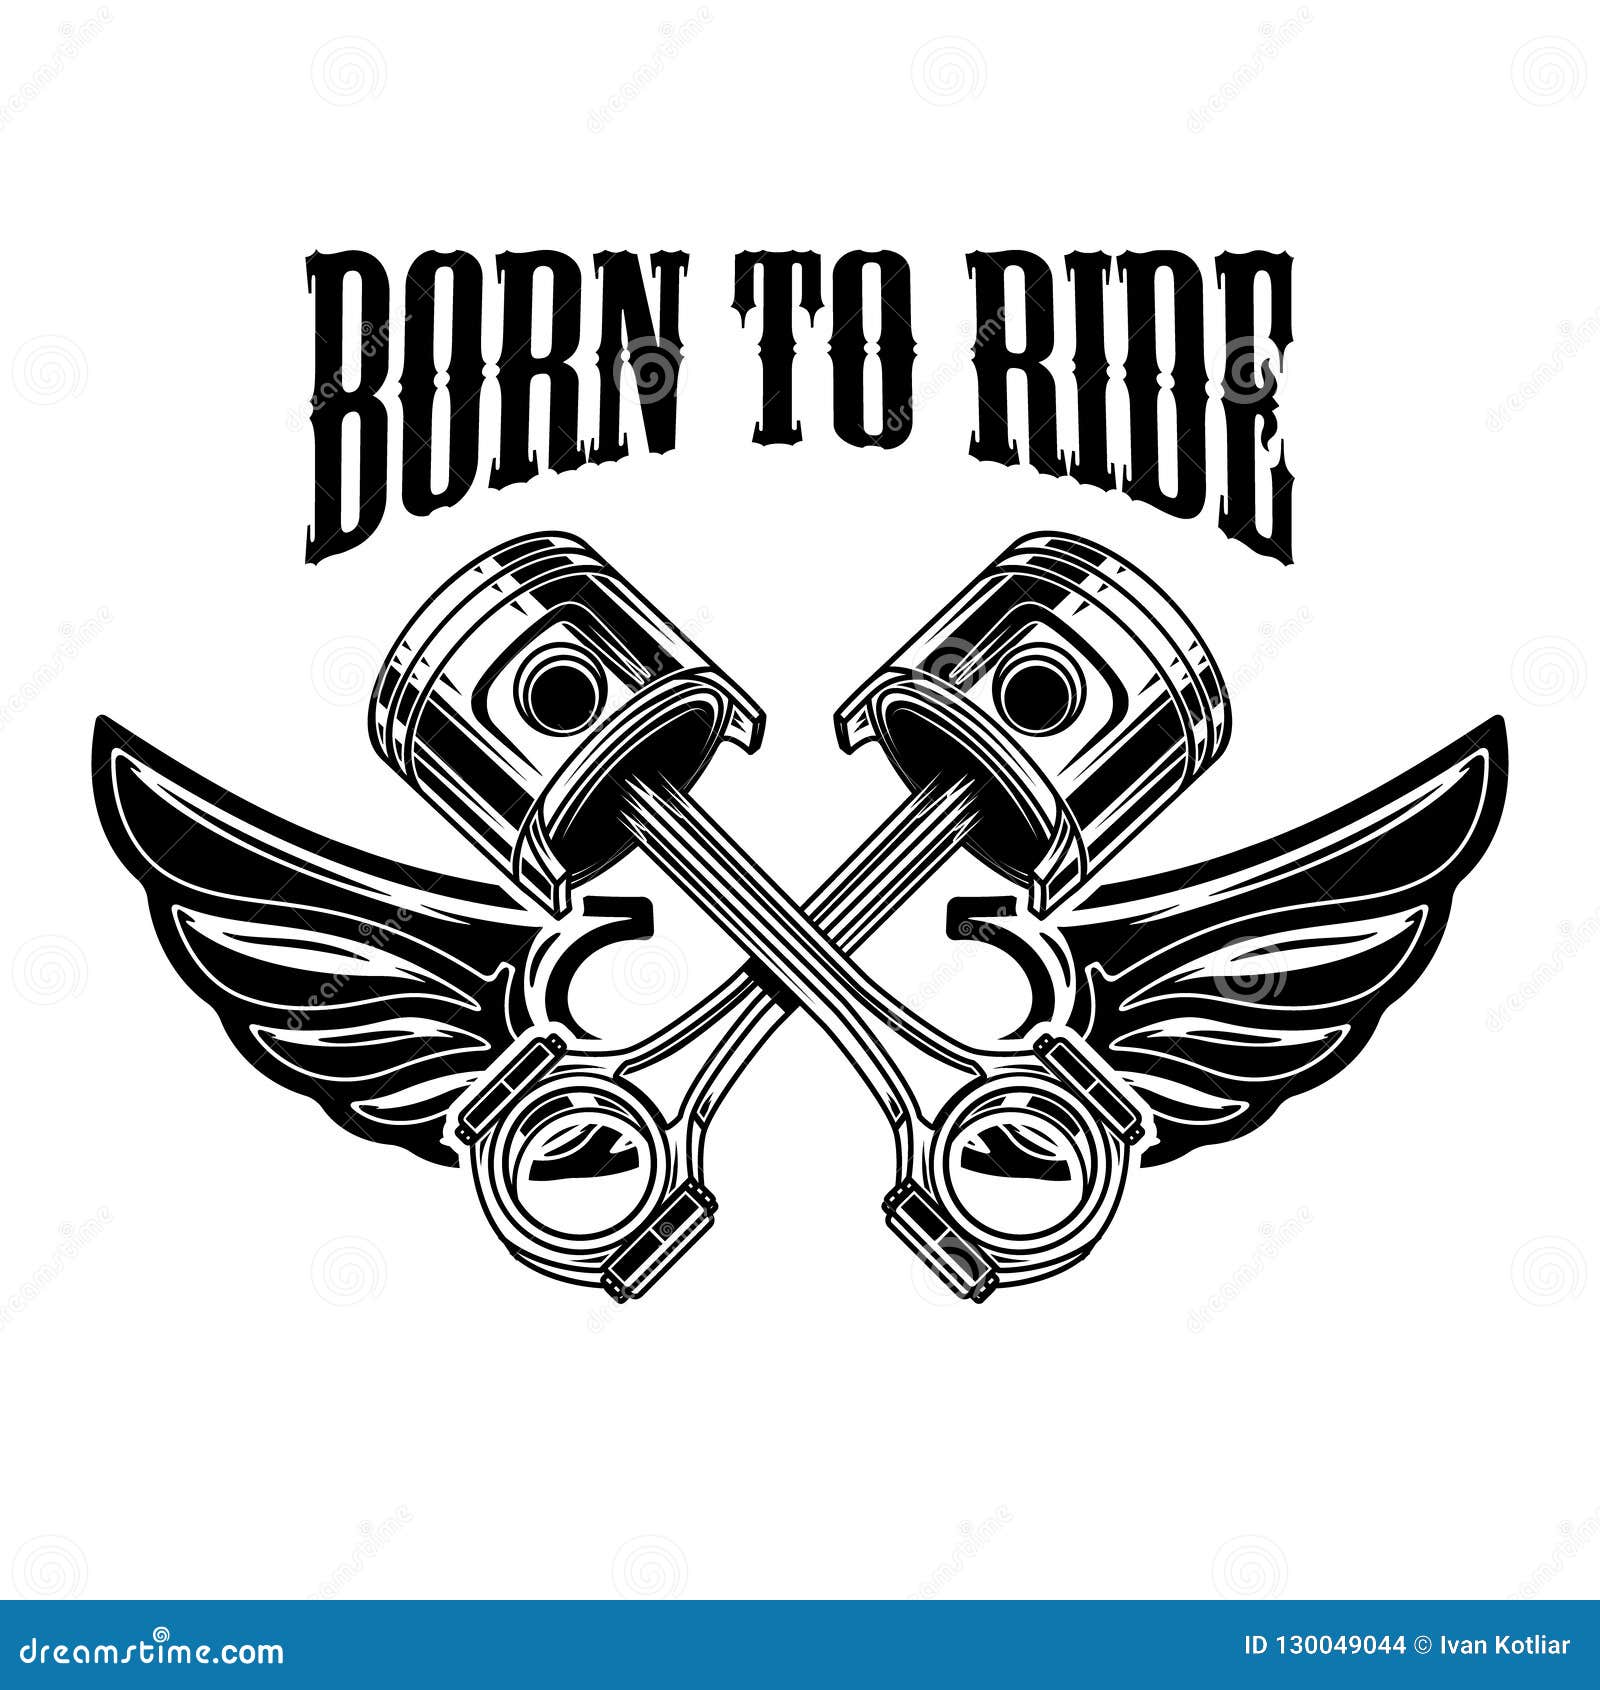 Born to Ride!